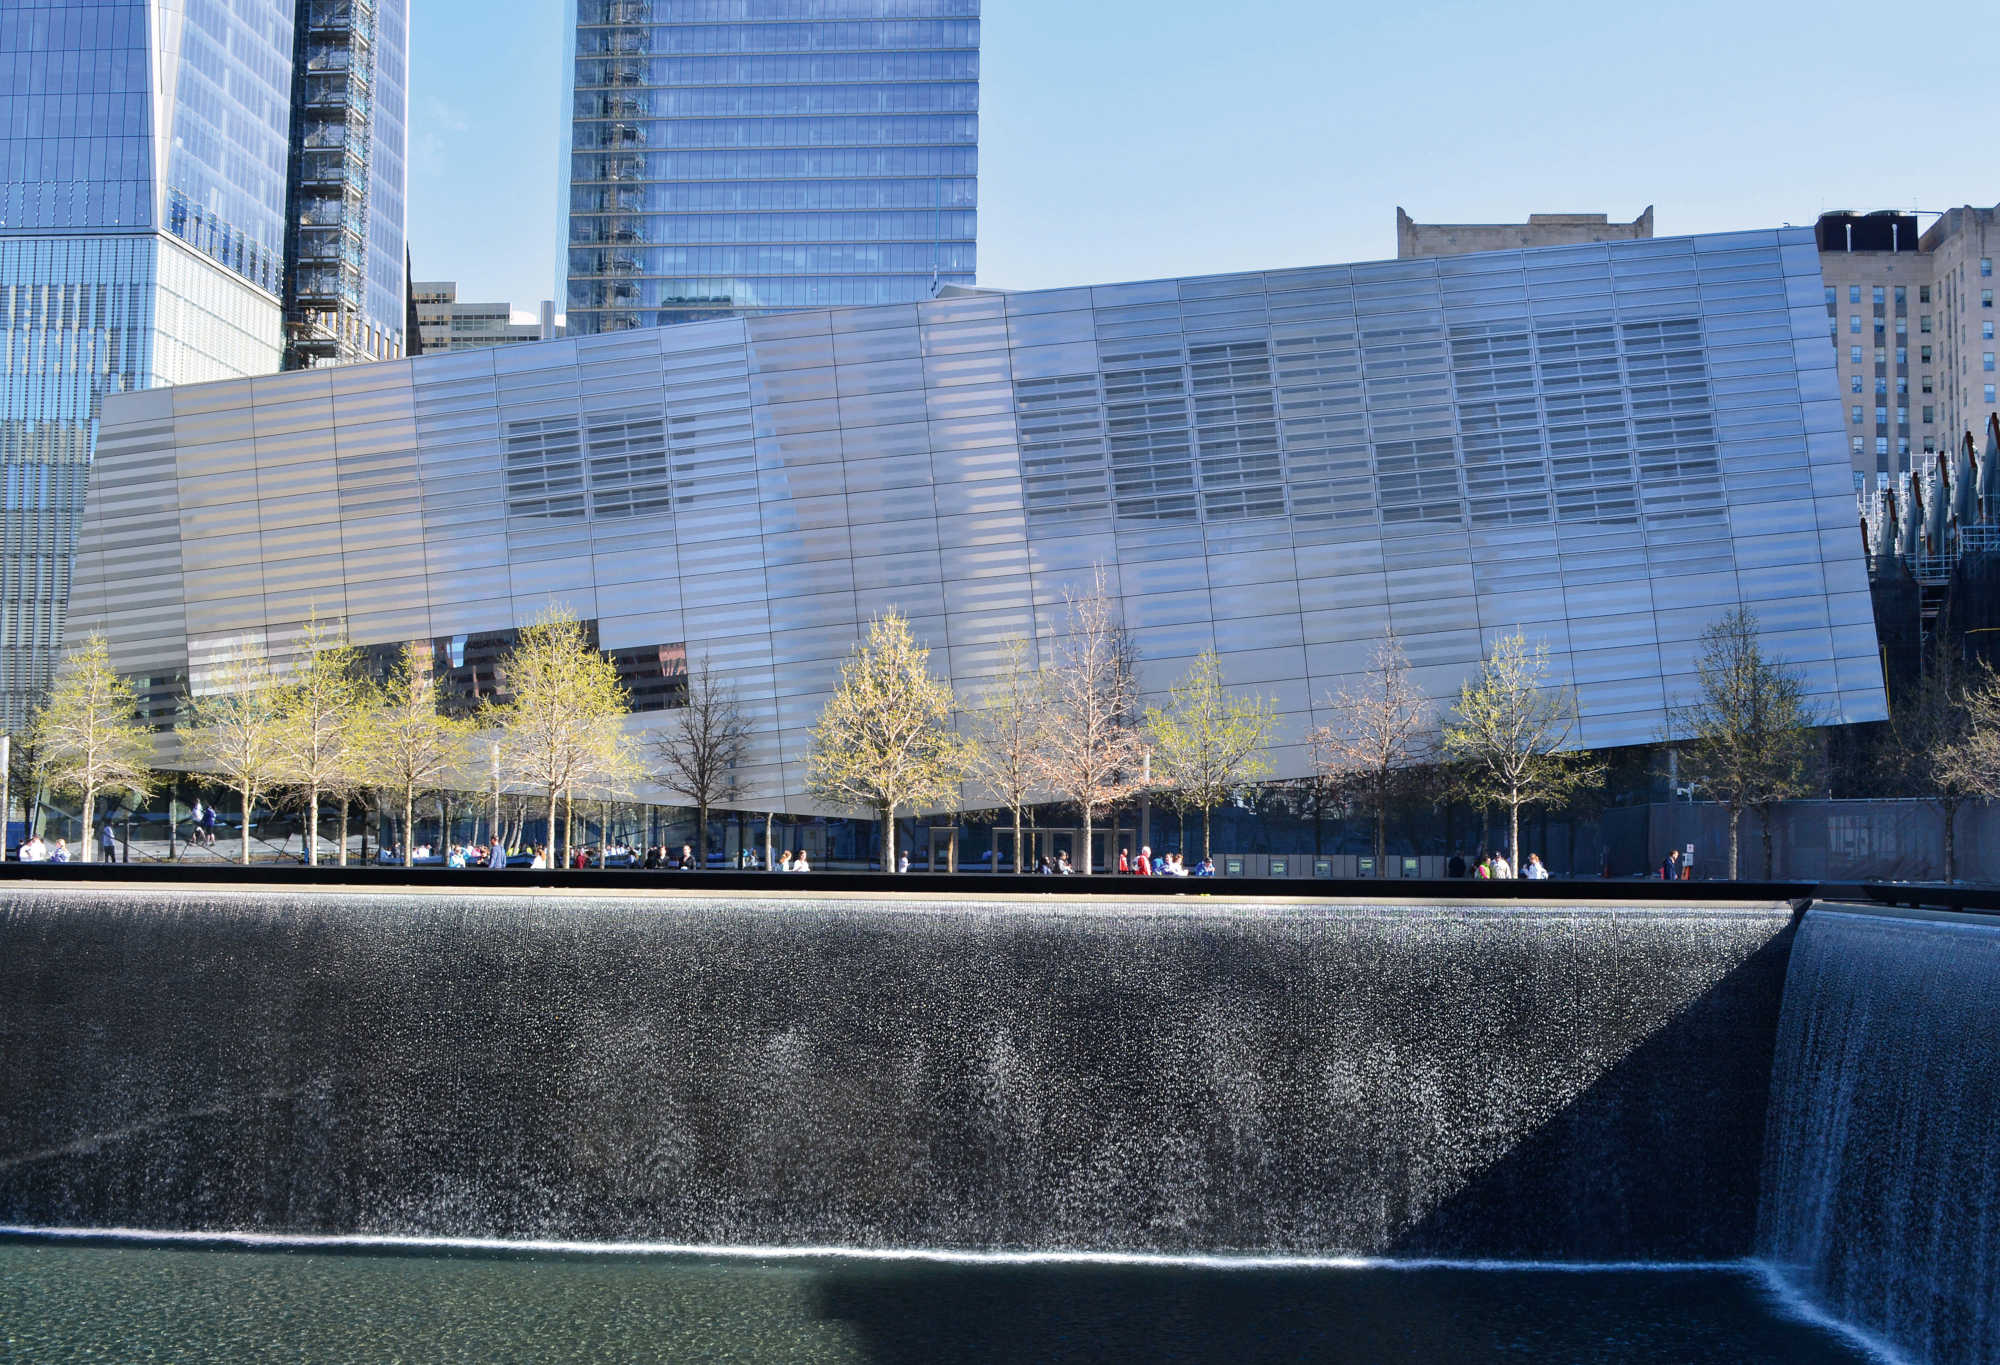 9/11 Memorial and Museum, New York City, New York, USA, Snøhetta and Davis Brody Bond (2014)